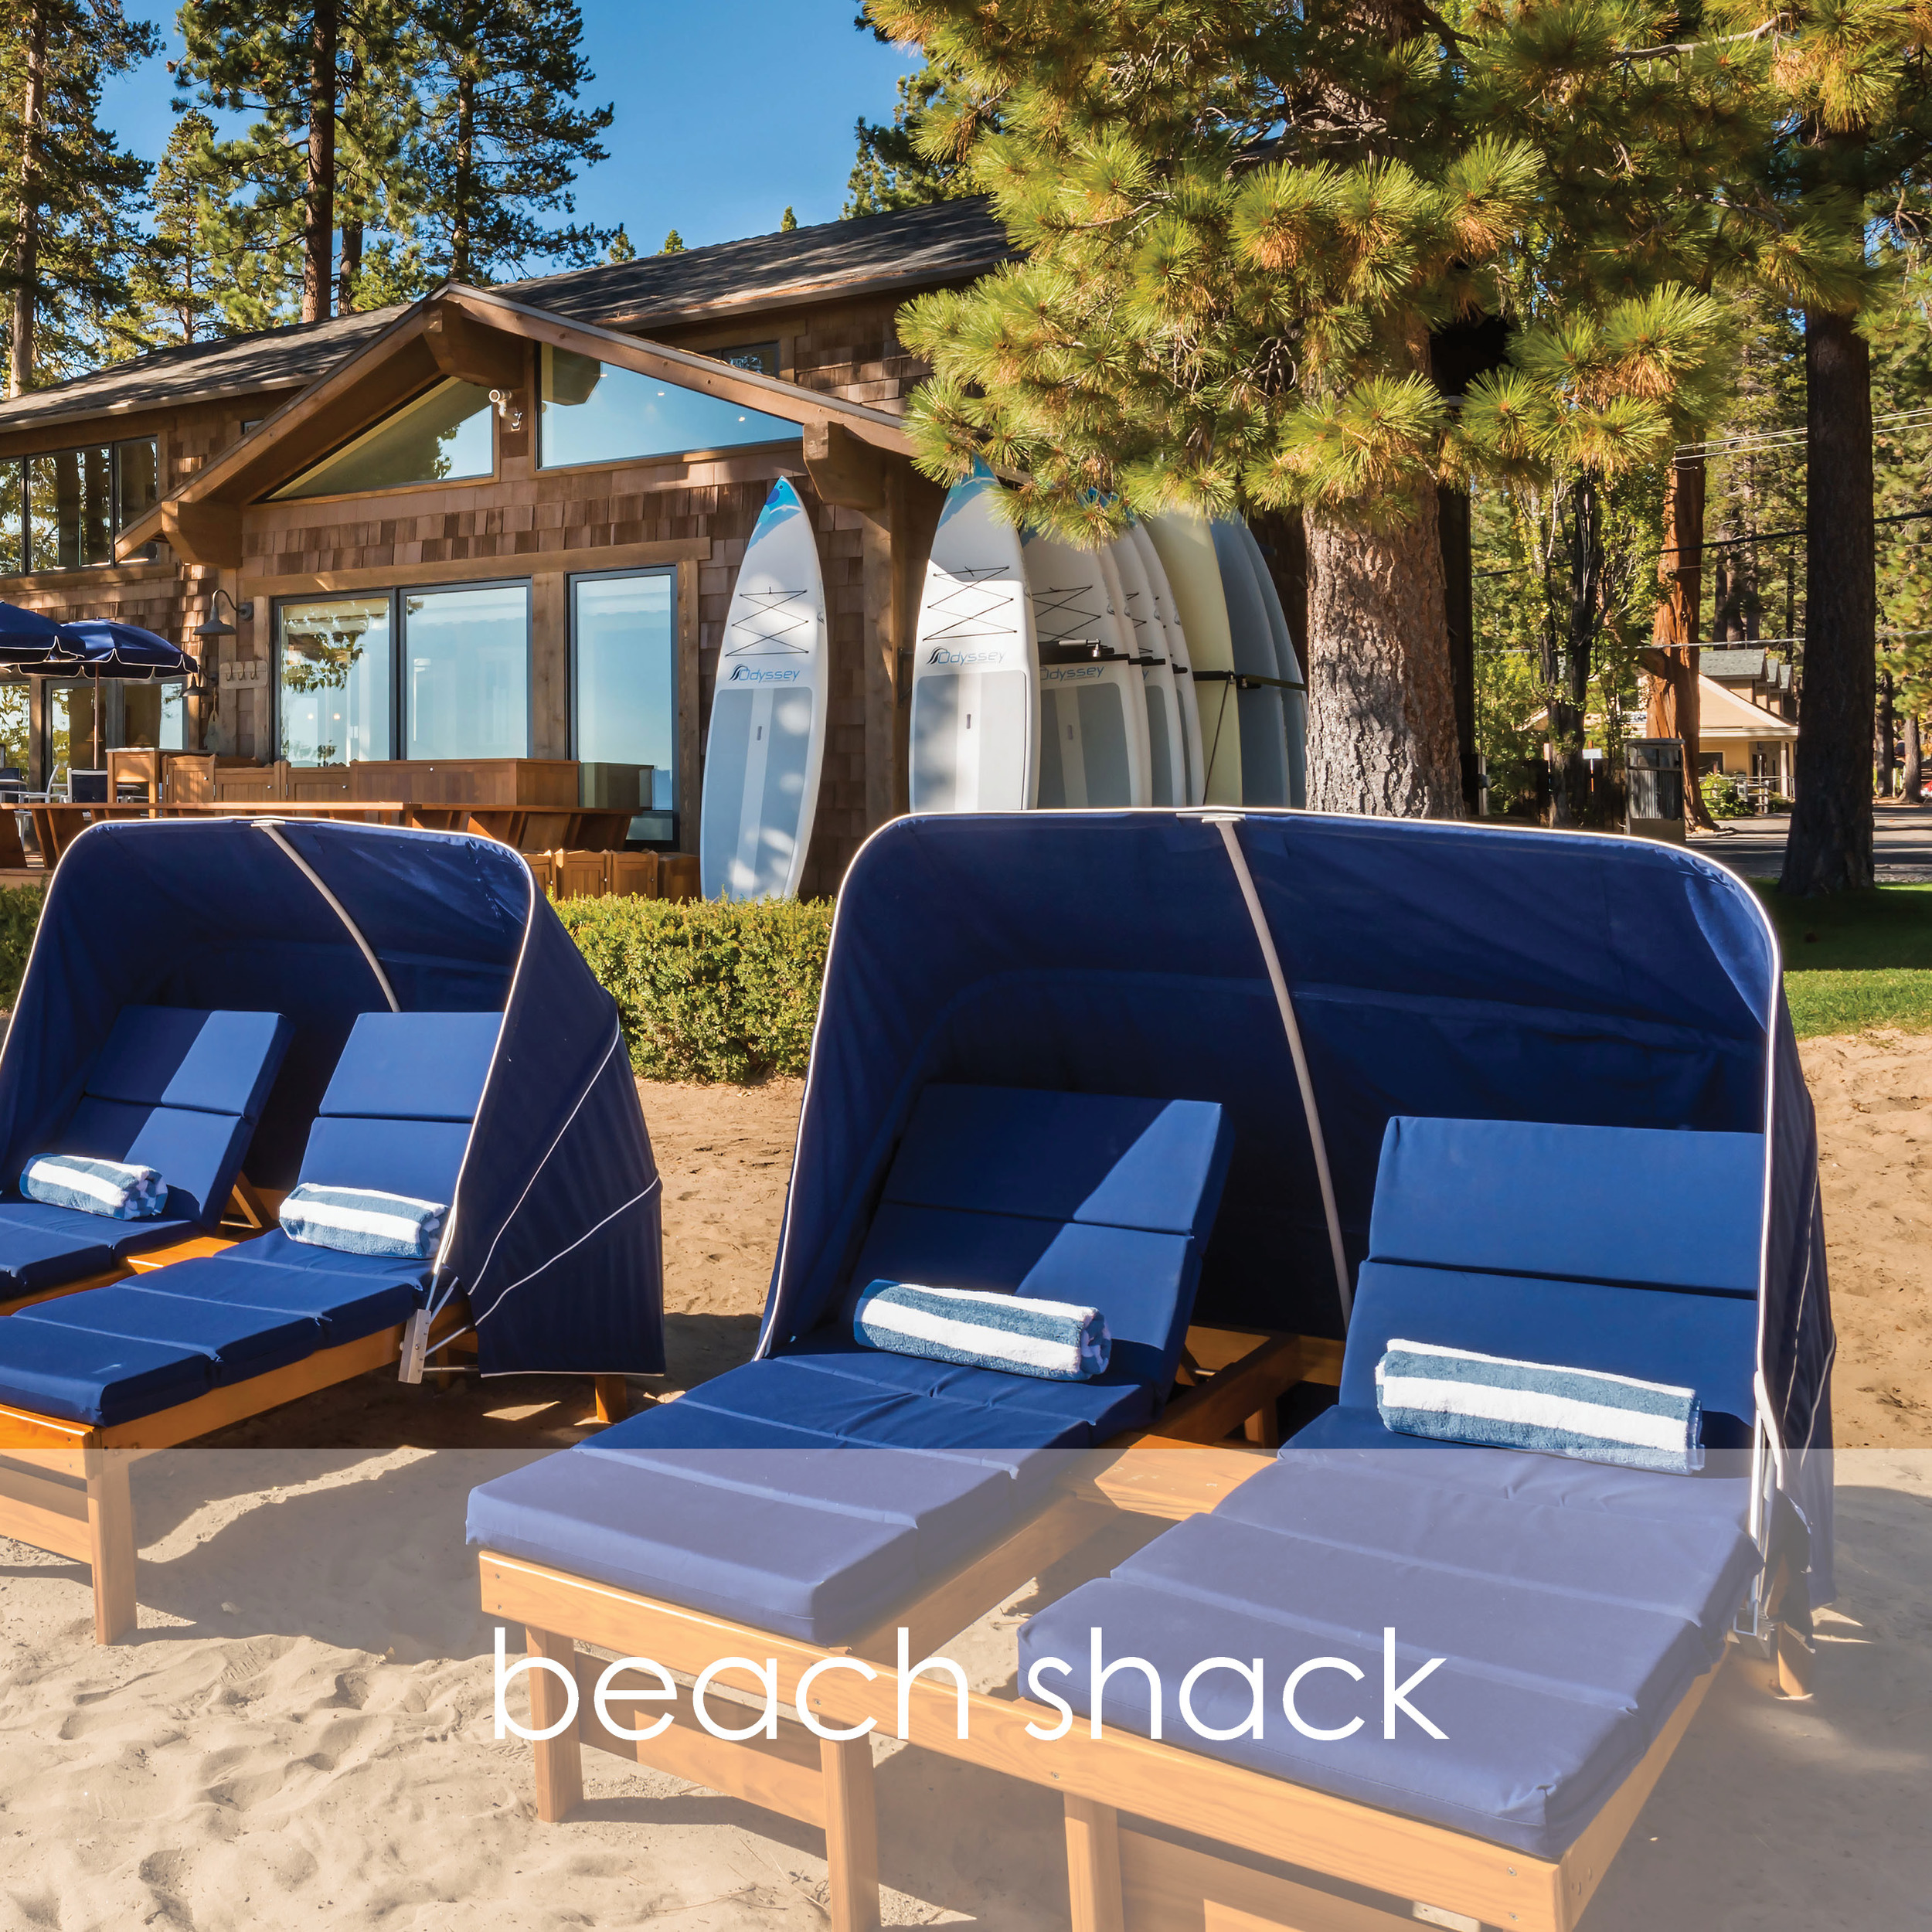 beach shack.jpg